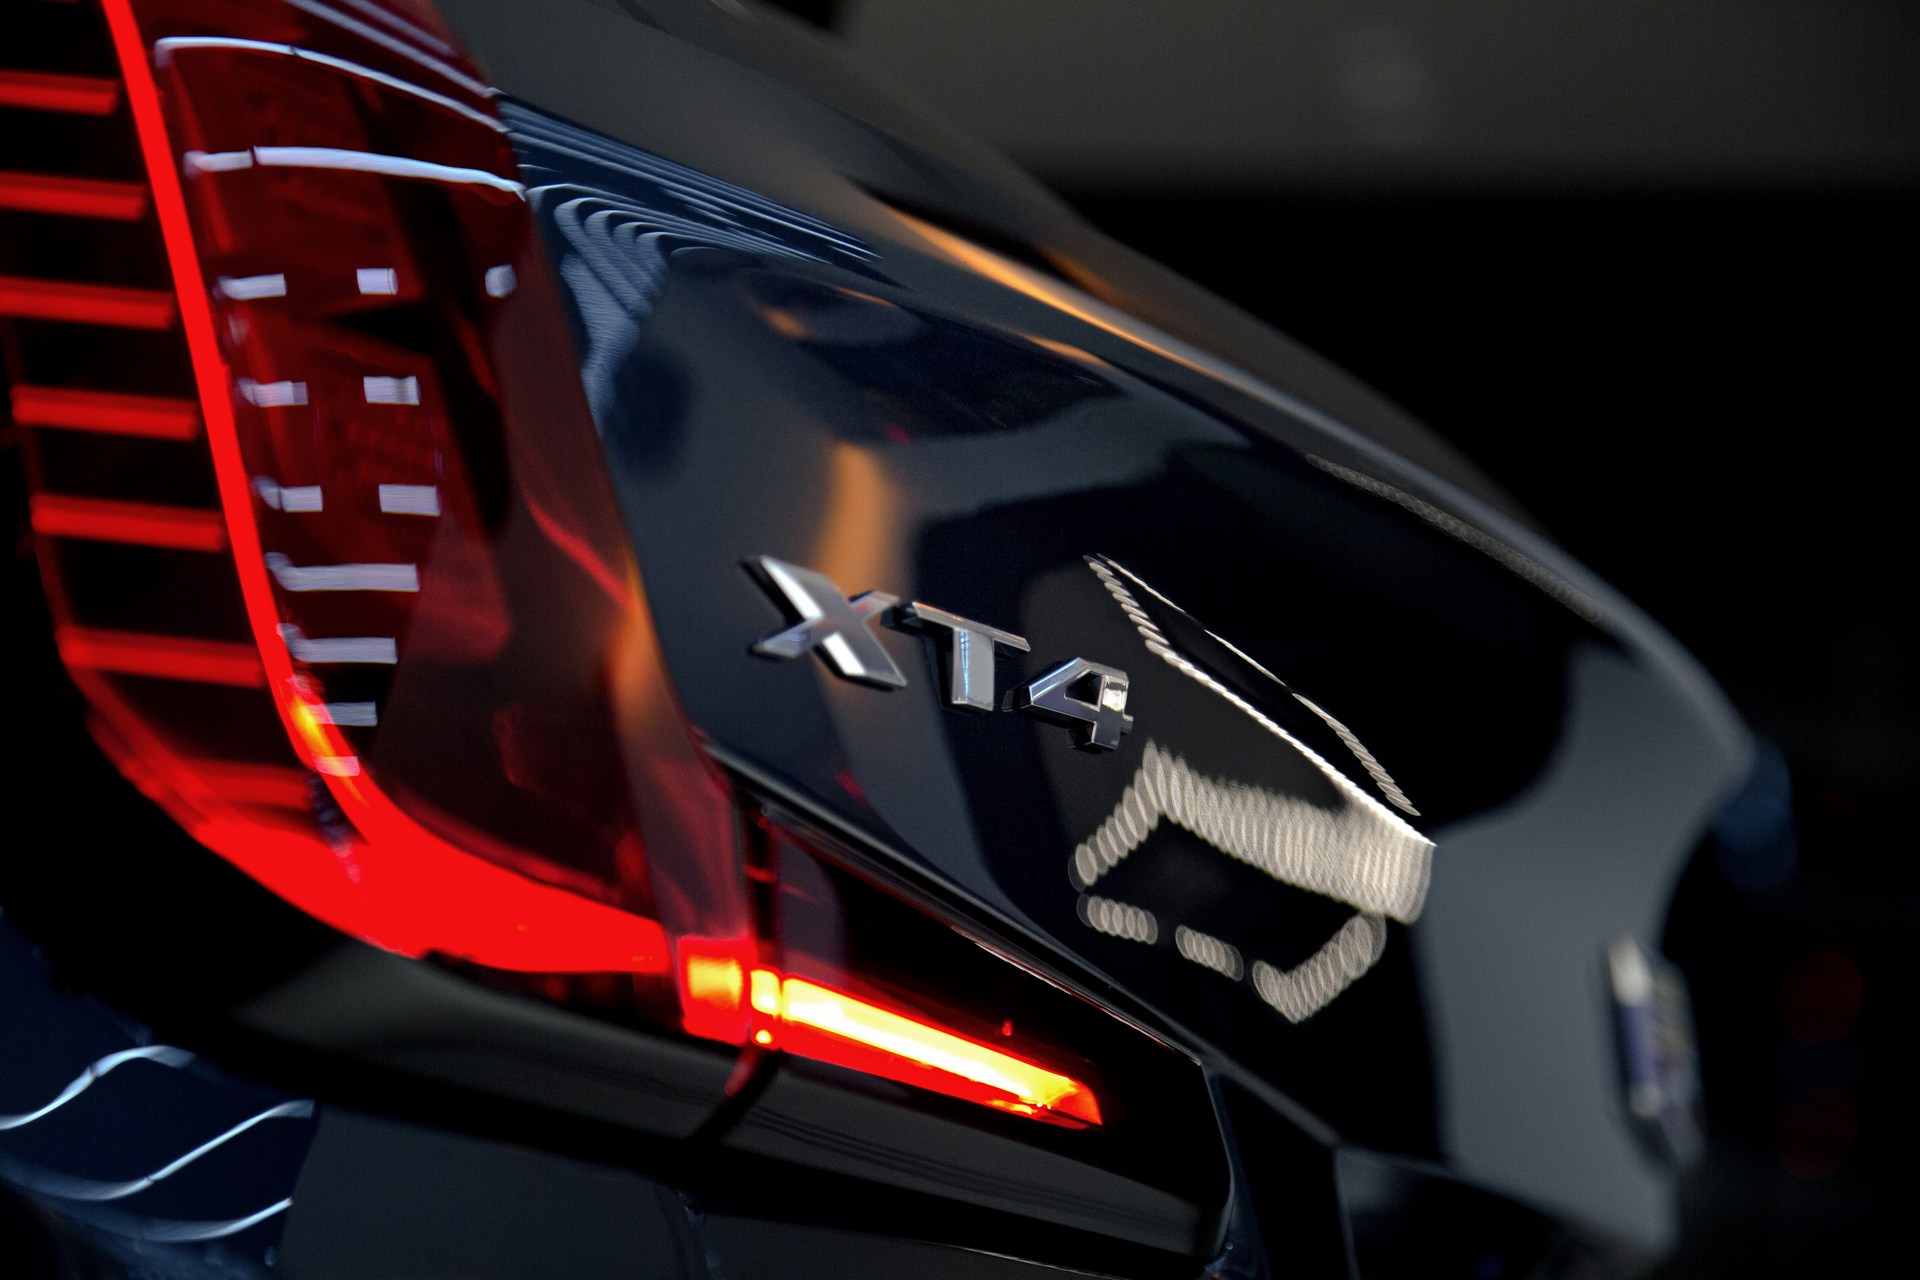 كاديلاك XT4 موديل 2019 تدشن نفسها رسمياً بسعر اقتصادي 20